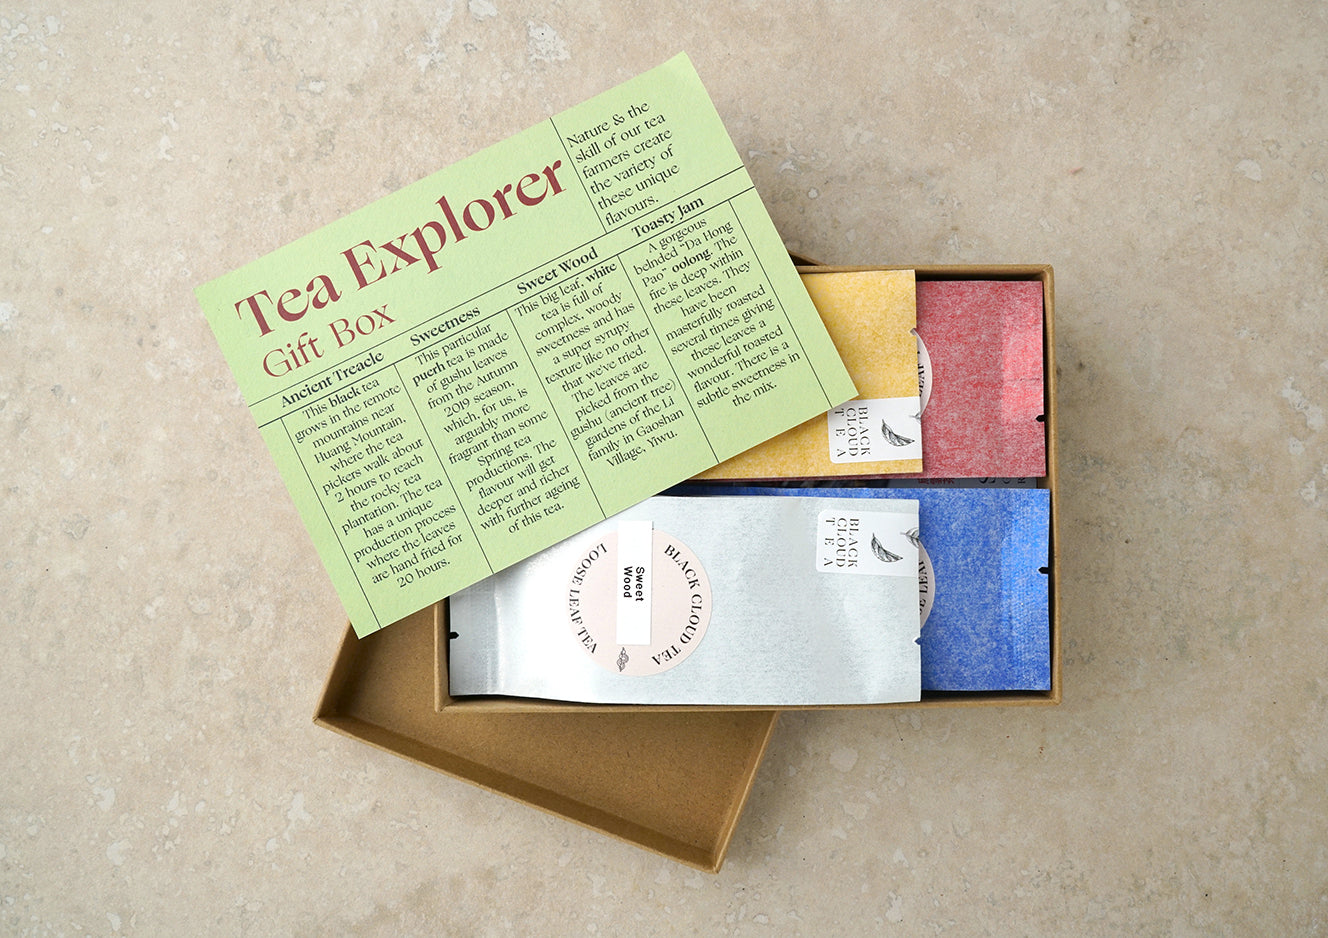 Tea Explorer Gift Box